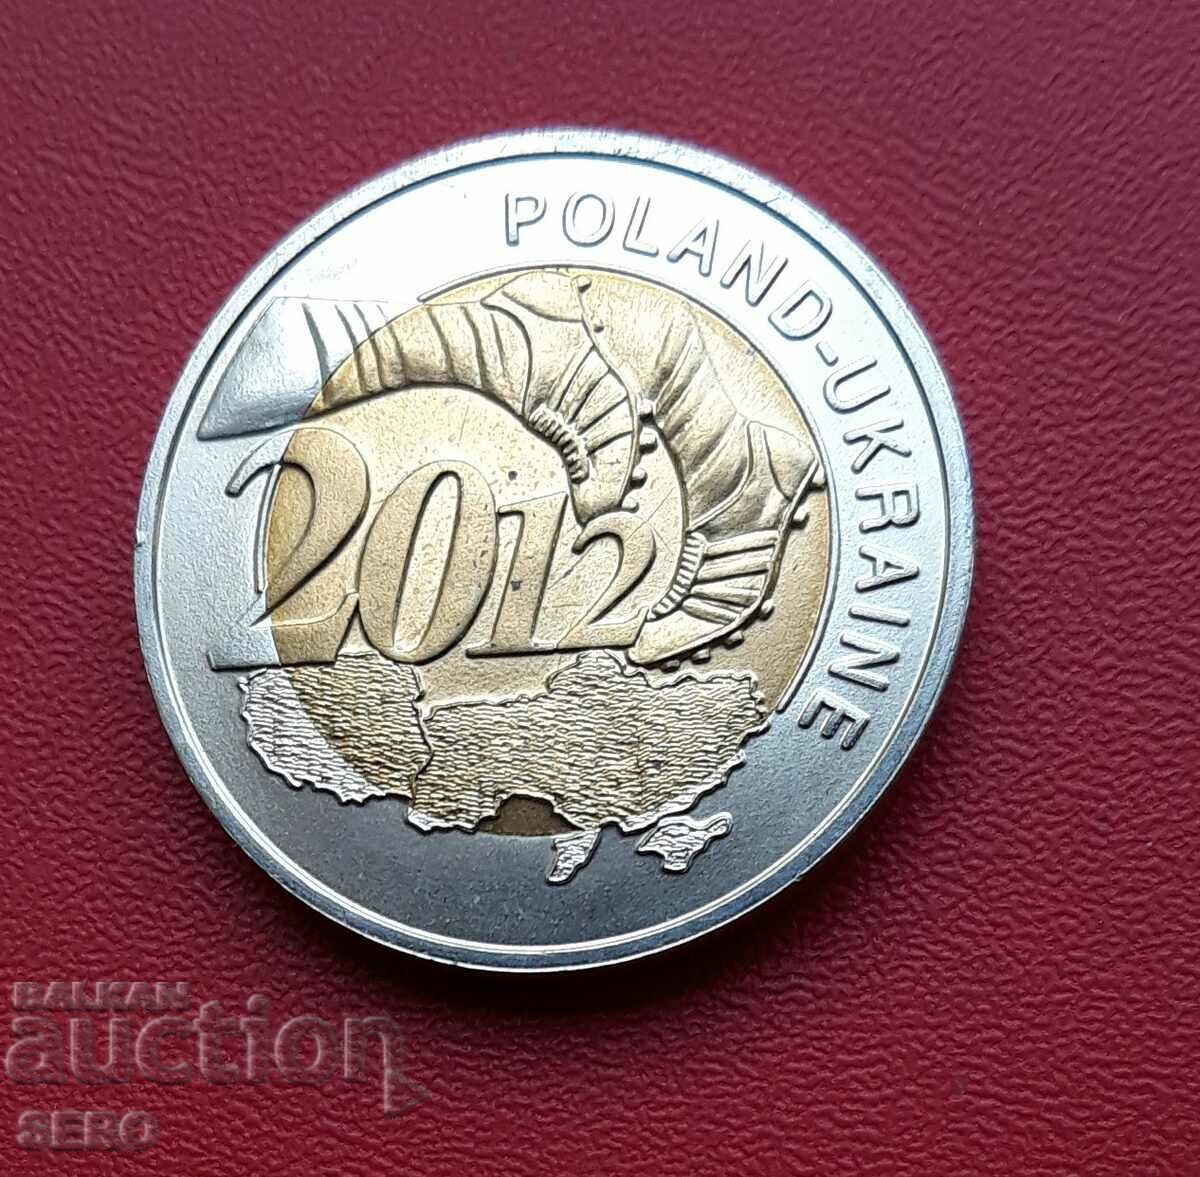 Полша и Украйна-европейско по футбол 2012